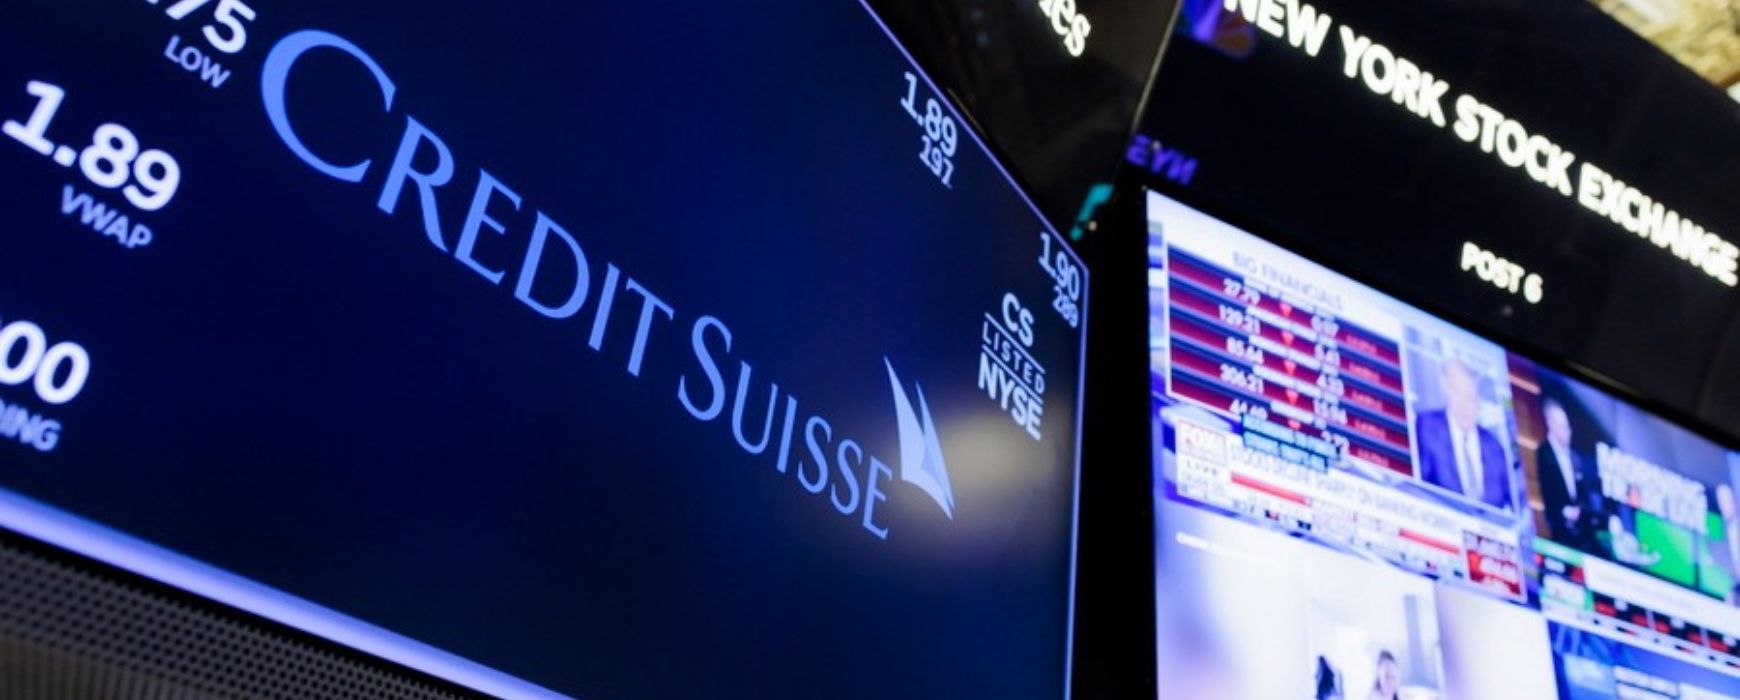 Credit Suisse: Πώς οδηγήθηκε στην κρίση ένας από τους μεγαλύτερους διαχειριστές πλούτου παγκοσμίως